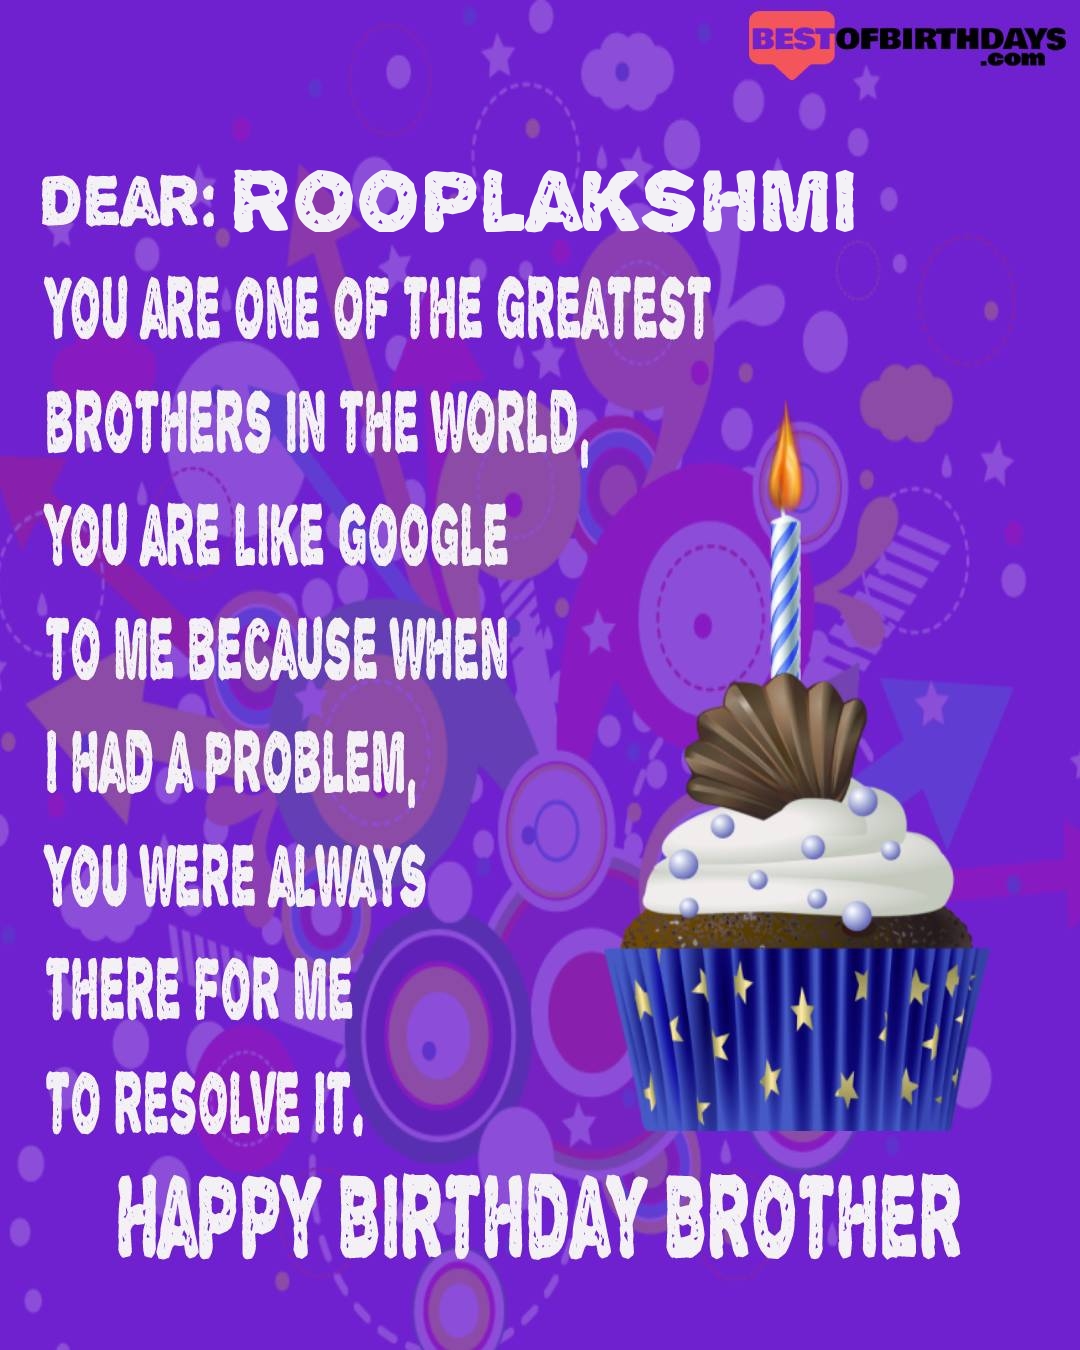 Happy birthday rooplakshmi bhai brother bro